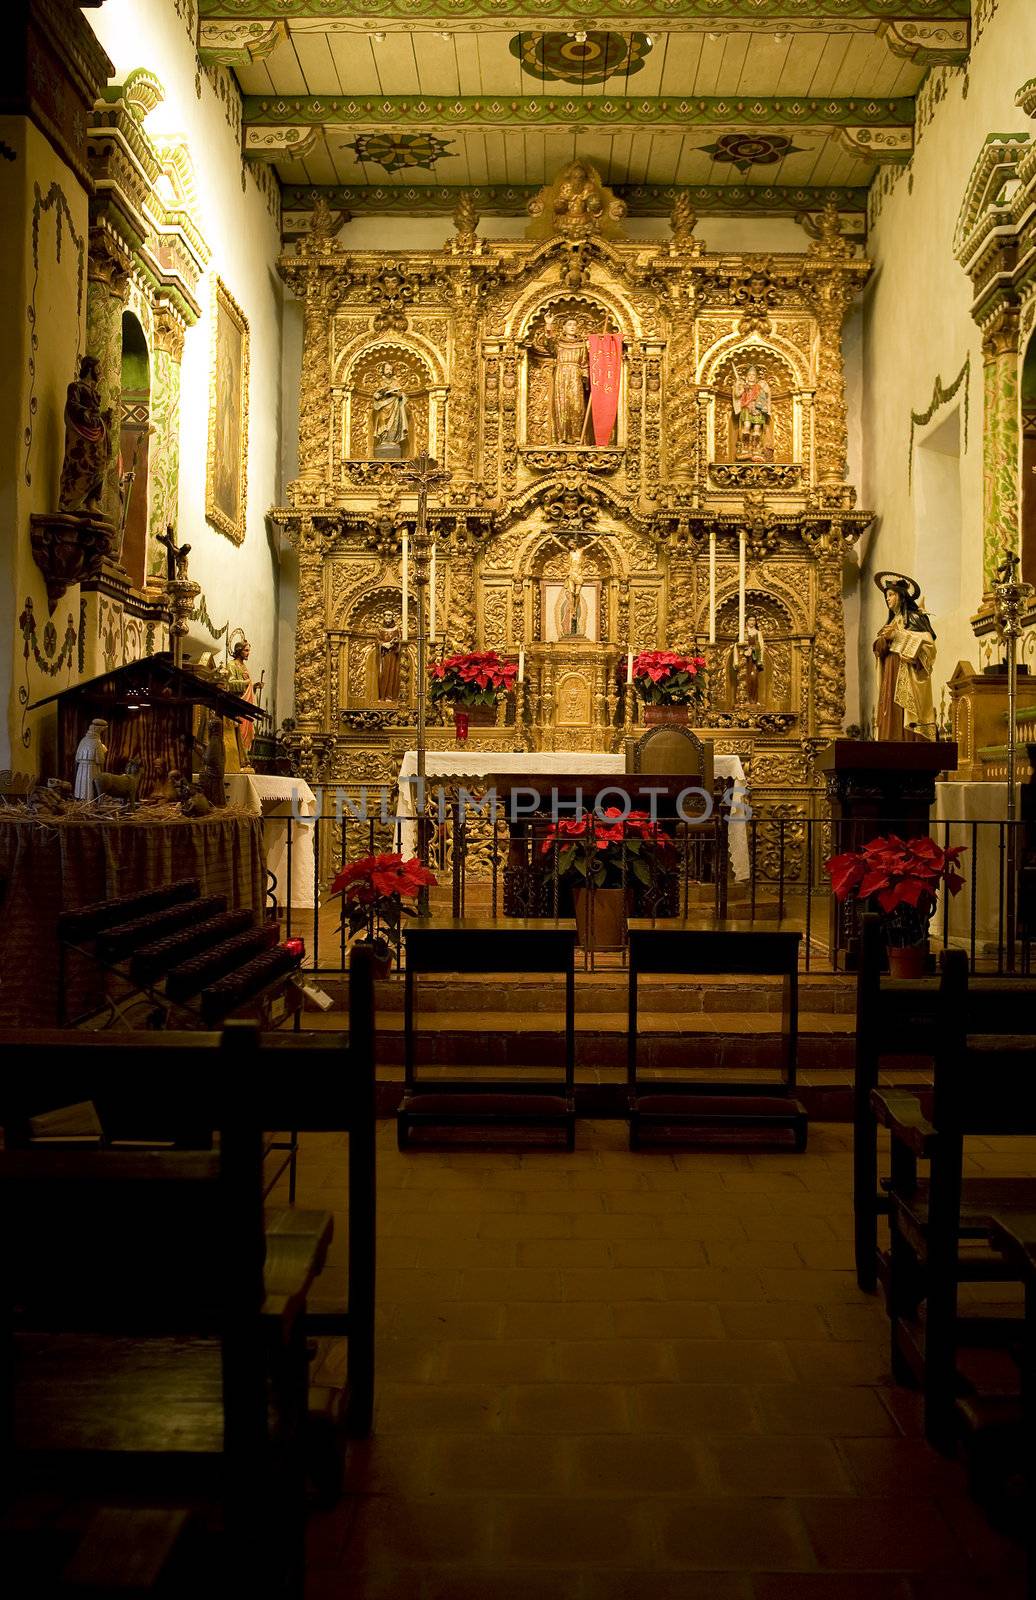 Mission San Juan Capistrano Church Alter at Christmas